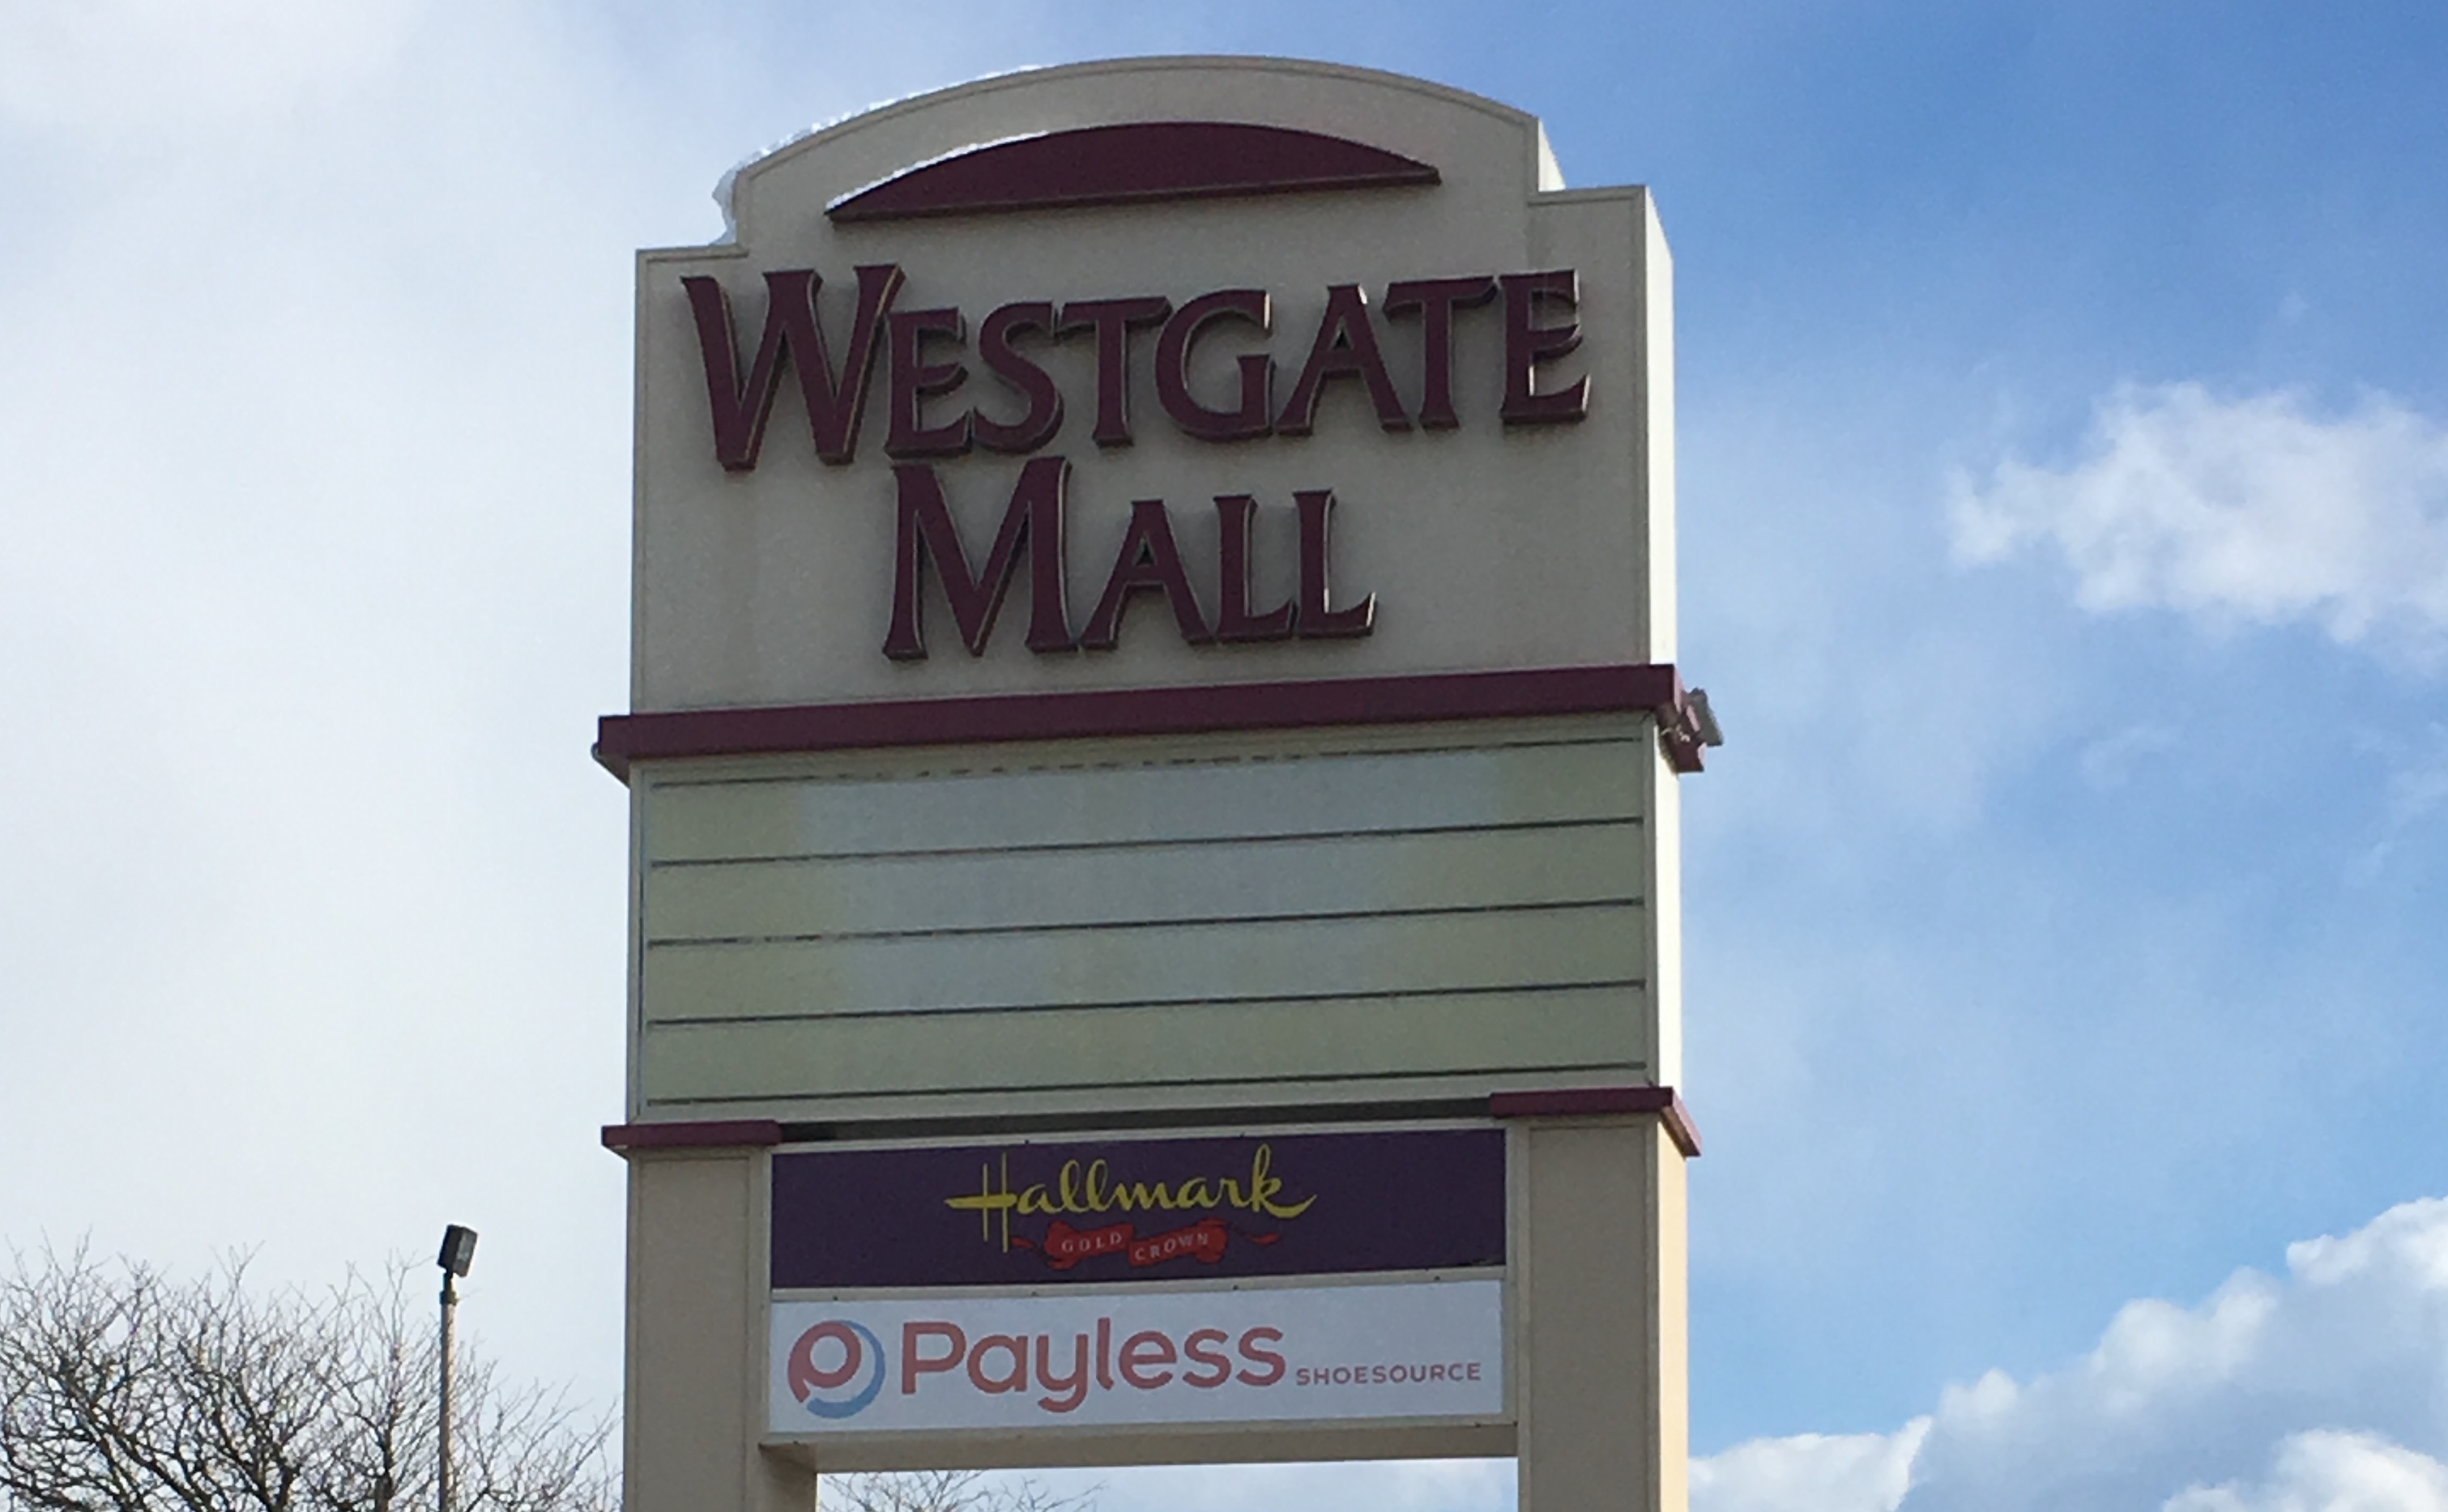 Bethlehem skate shop announces move to new location amid Westgate Mall saga 